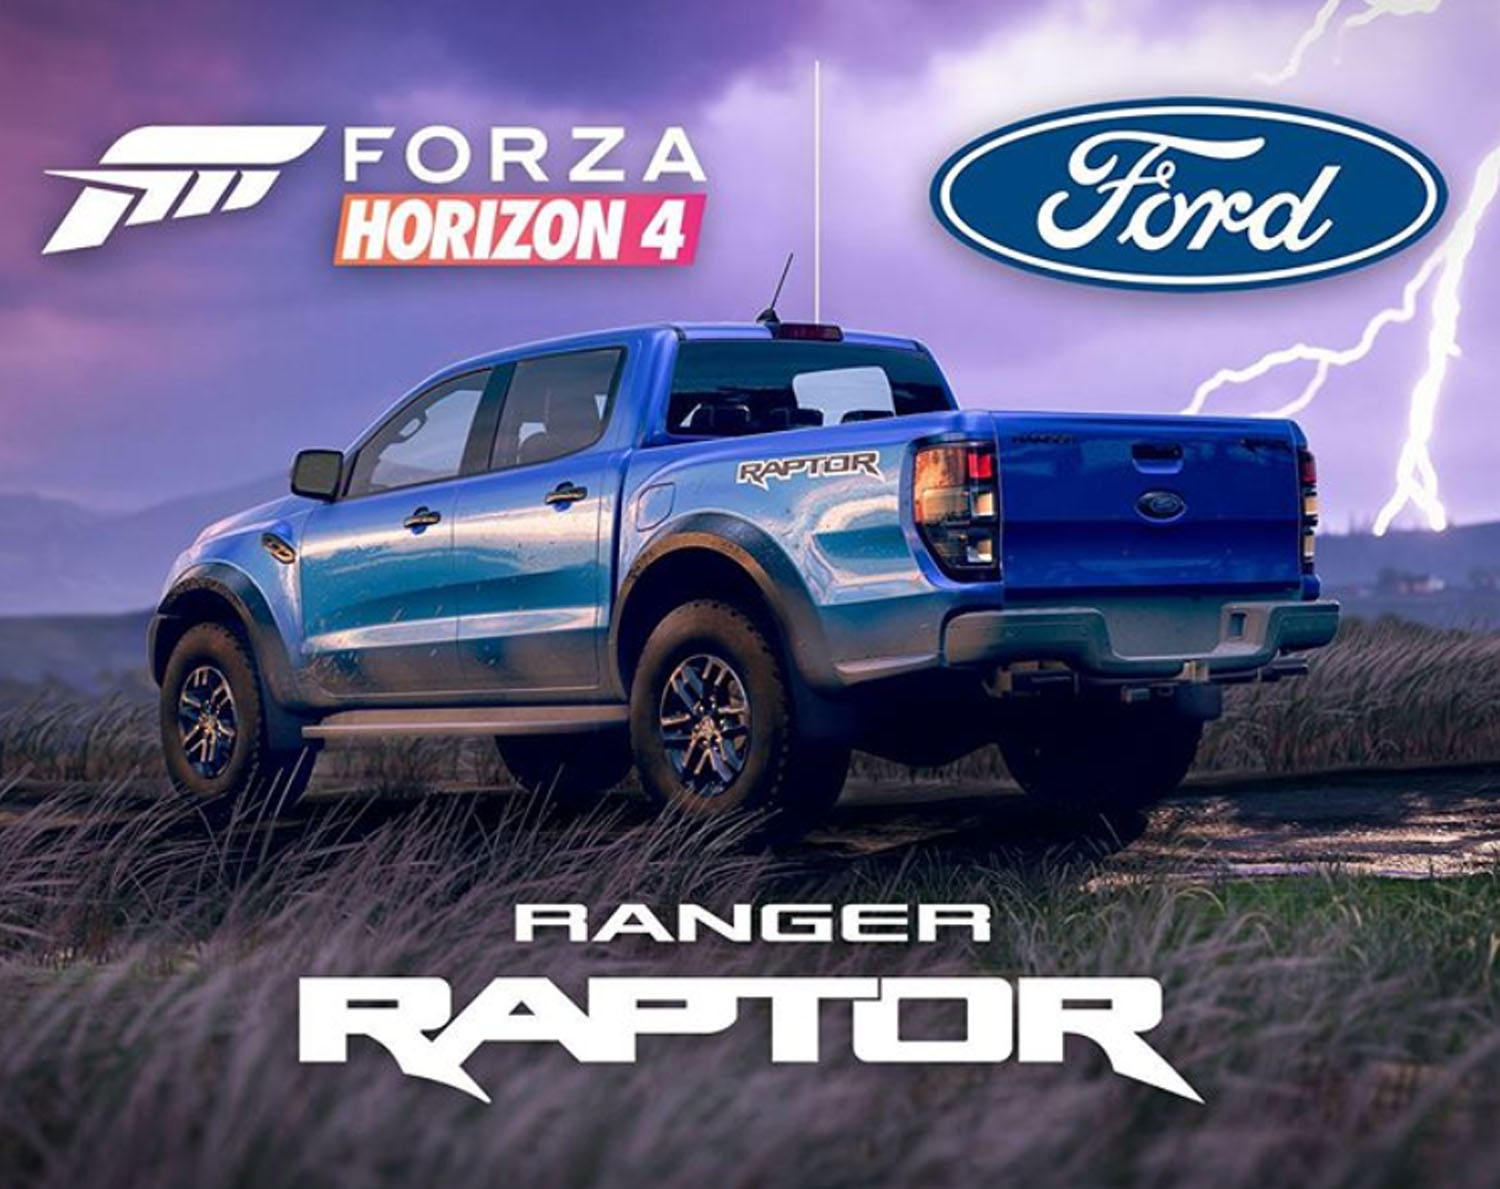 Ford Ranger Raptor Lands On Forza Horizon 4 Today